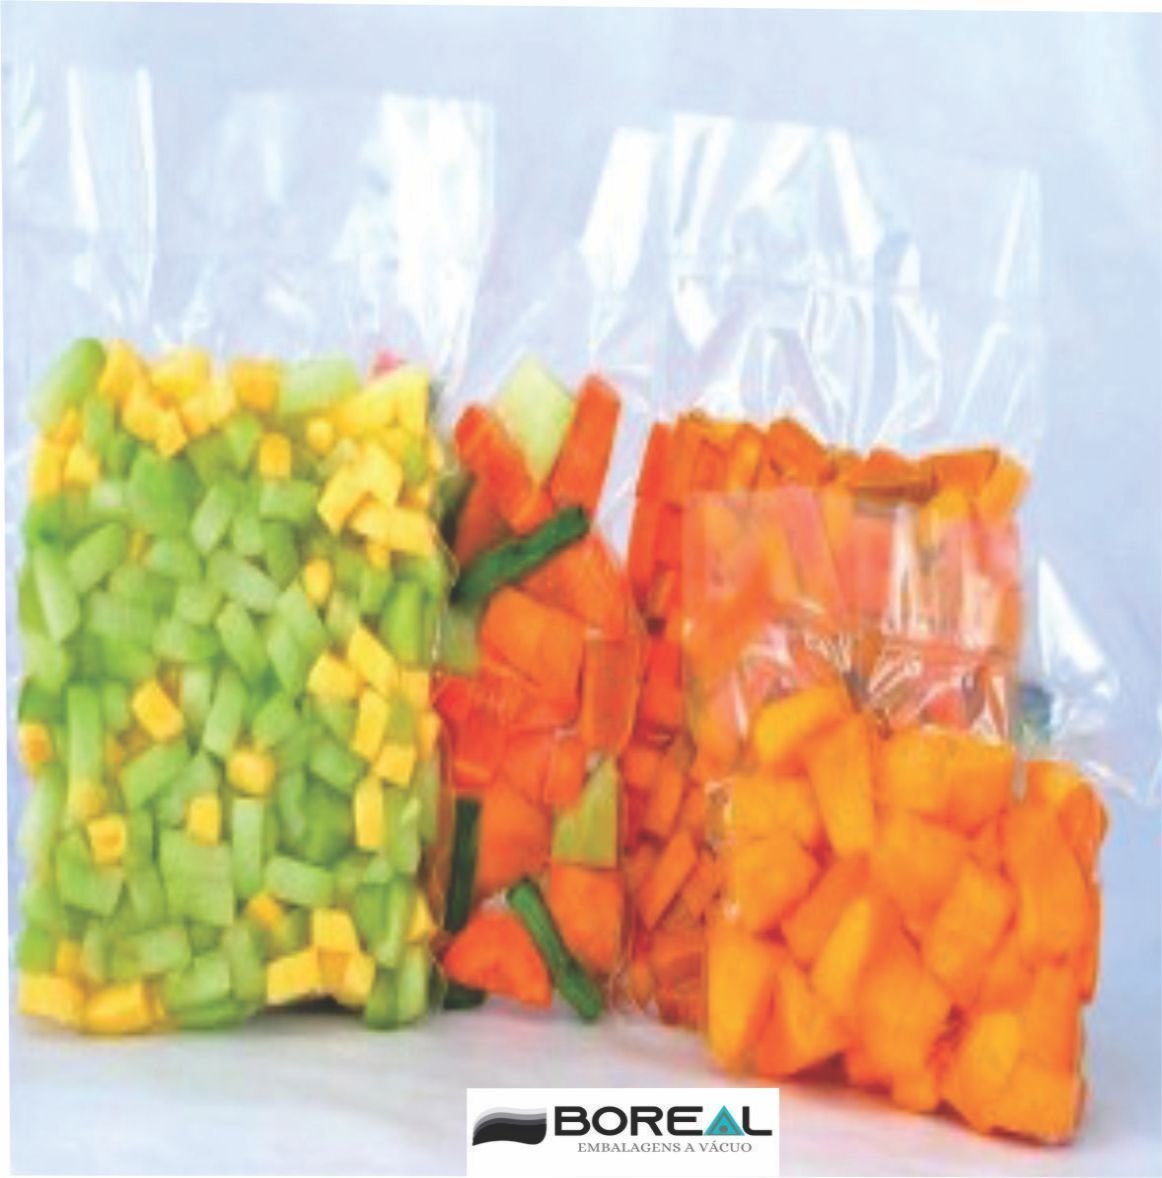 Saco de Embalagem a Vácuo Nylon Poli 20x30 10 Micras - Kits Boreal Embalagens a Vácuo Embalagem a Vá - 7